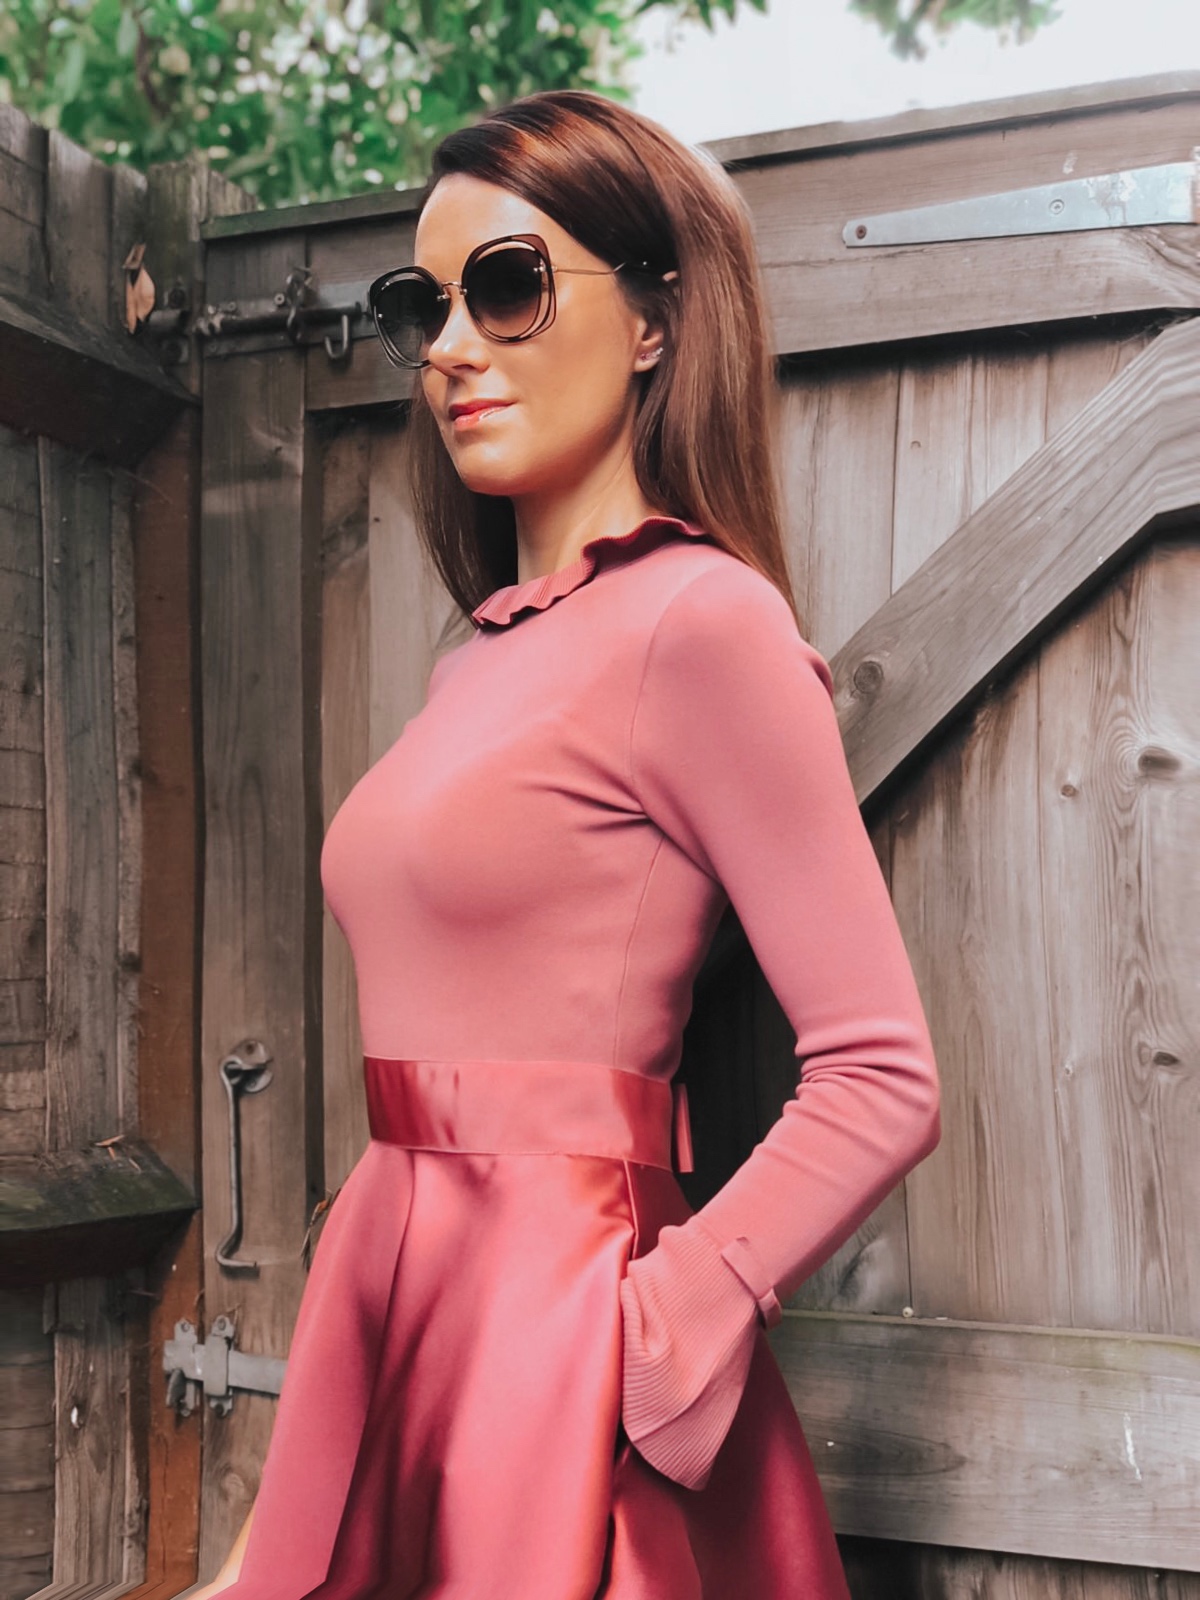 Elegant Duchess Fashion Ted Baker Pink Zadi Skater Dress | Kurt Geiger London Barbican-Wine-(Fabric) Knit Ankle Boot | Miu Miu Sunglasses | Swarovski earrings | Accessorize clutch bag